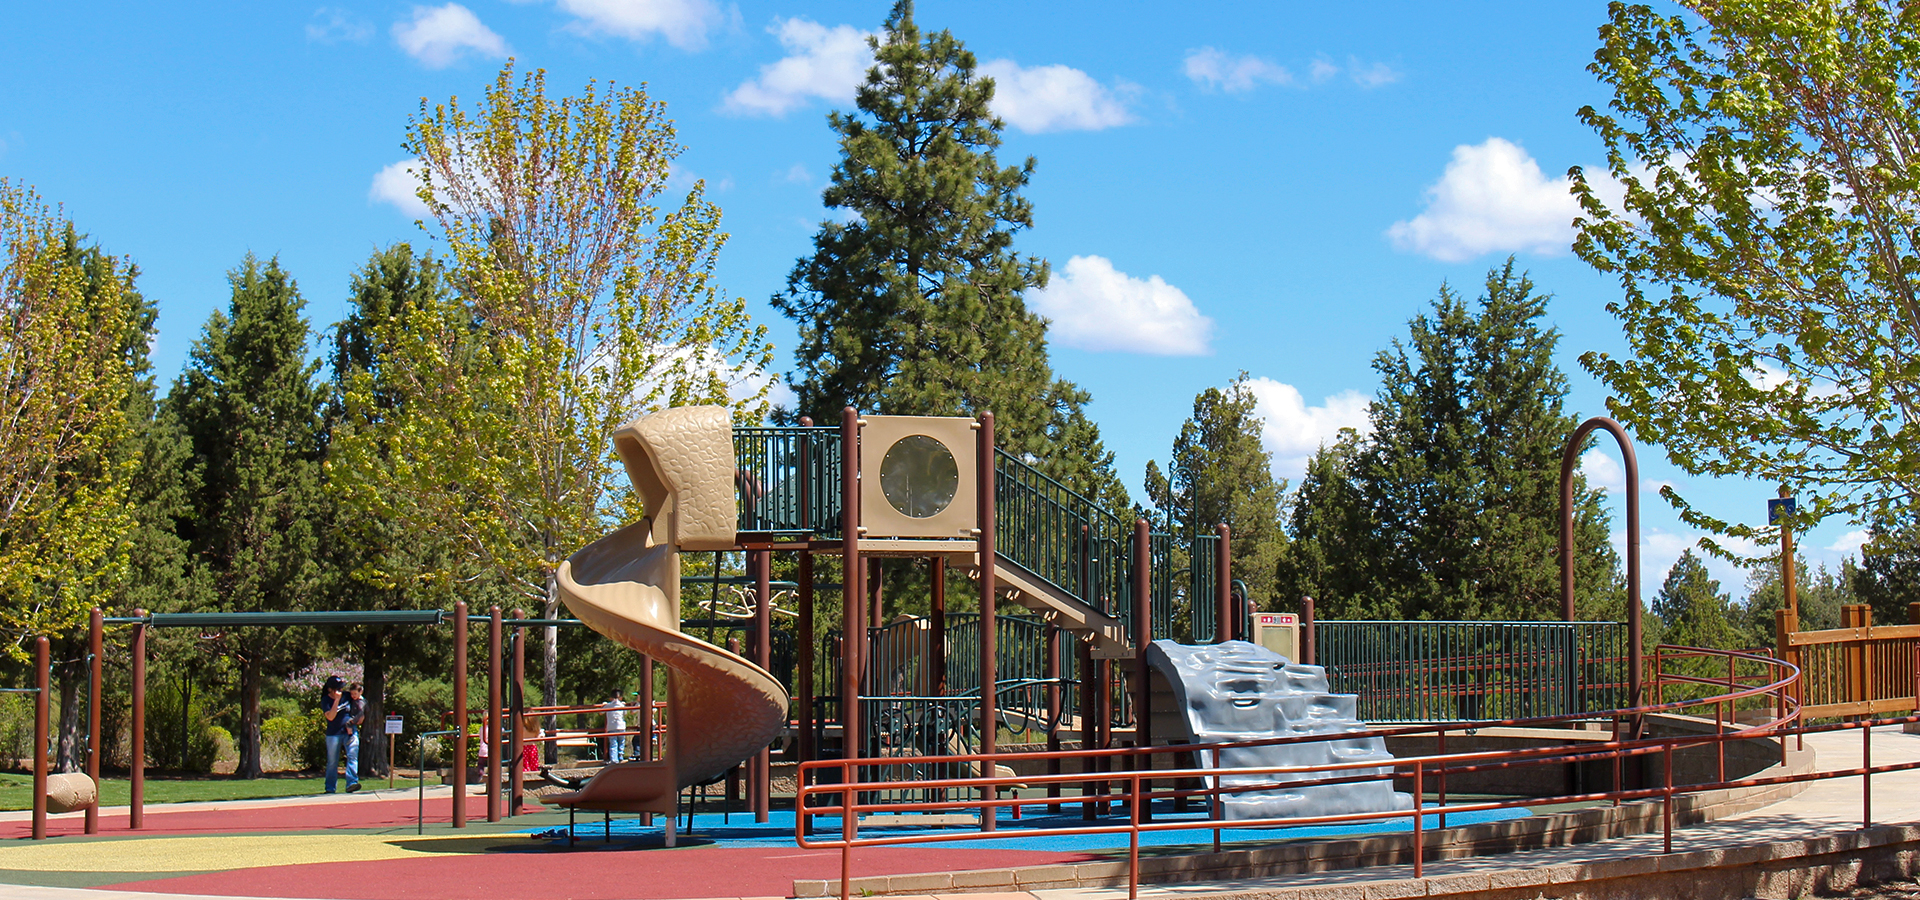 Larkspur Park's playground.